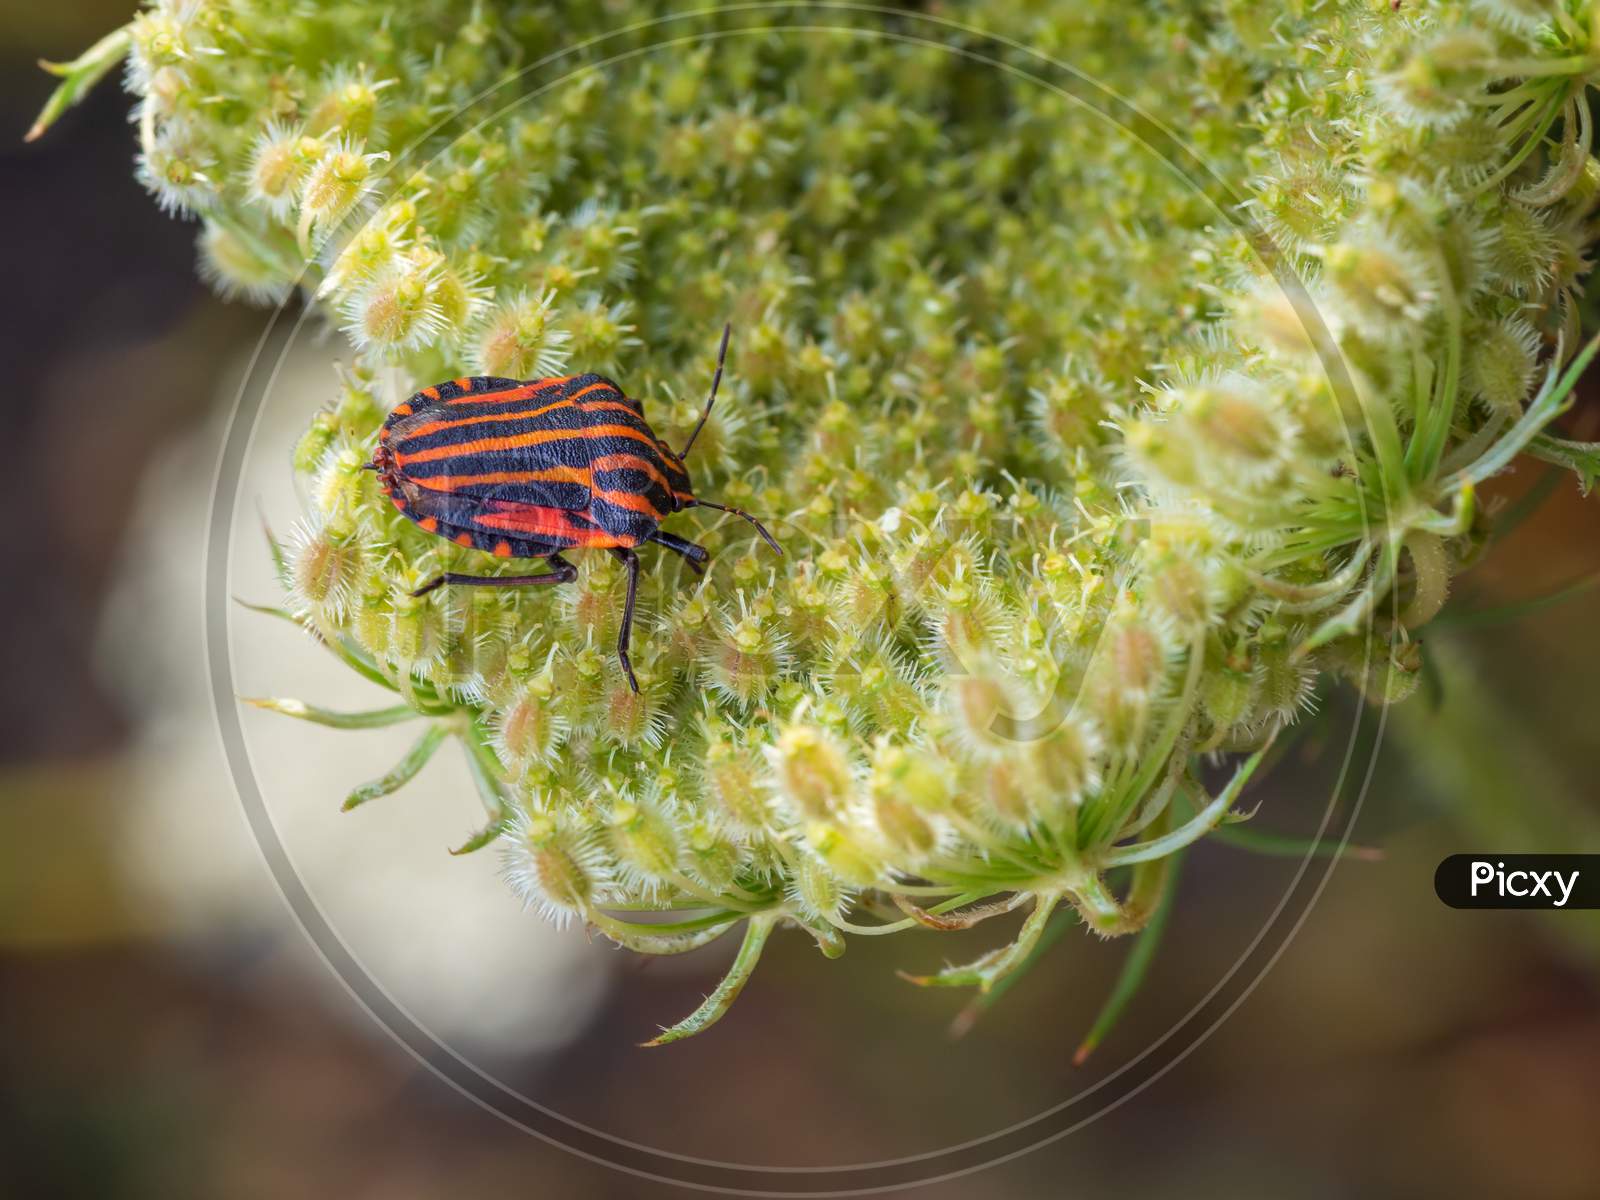 Close-Up Of Italian Striped Bug On The Wild Carrot Flower (Daucus Carota).